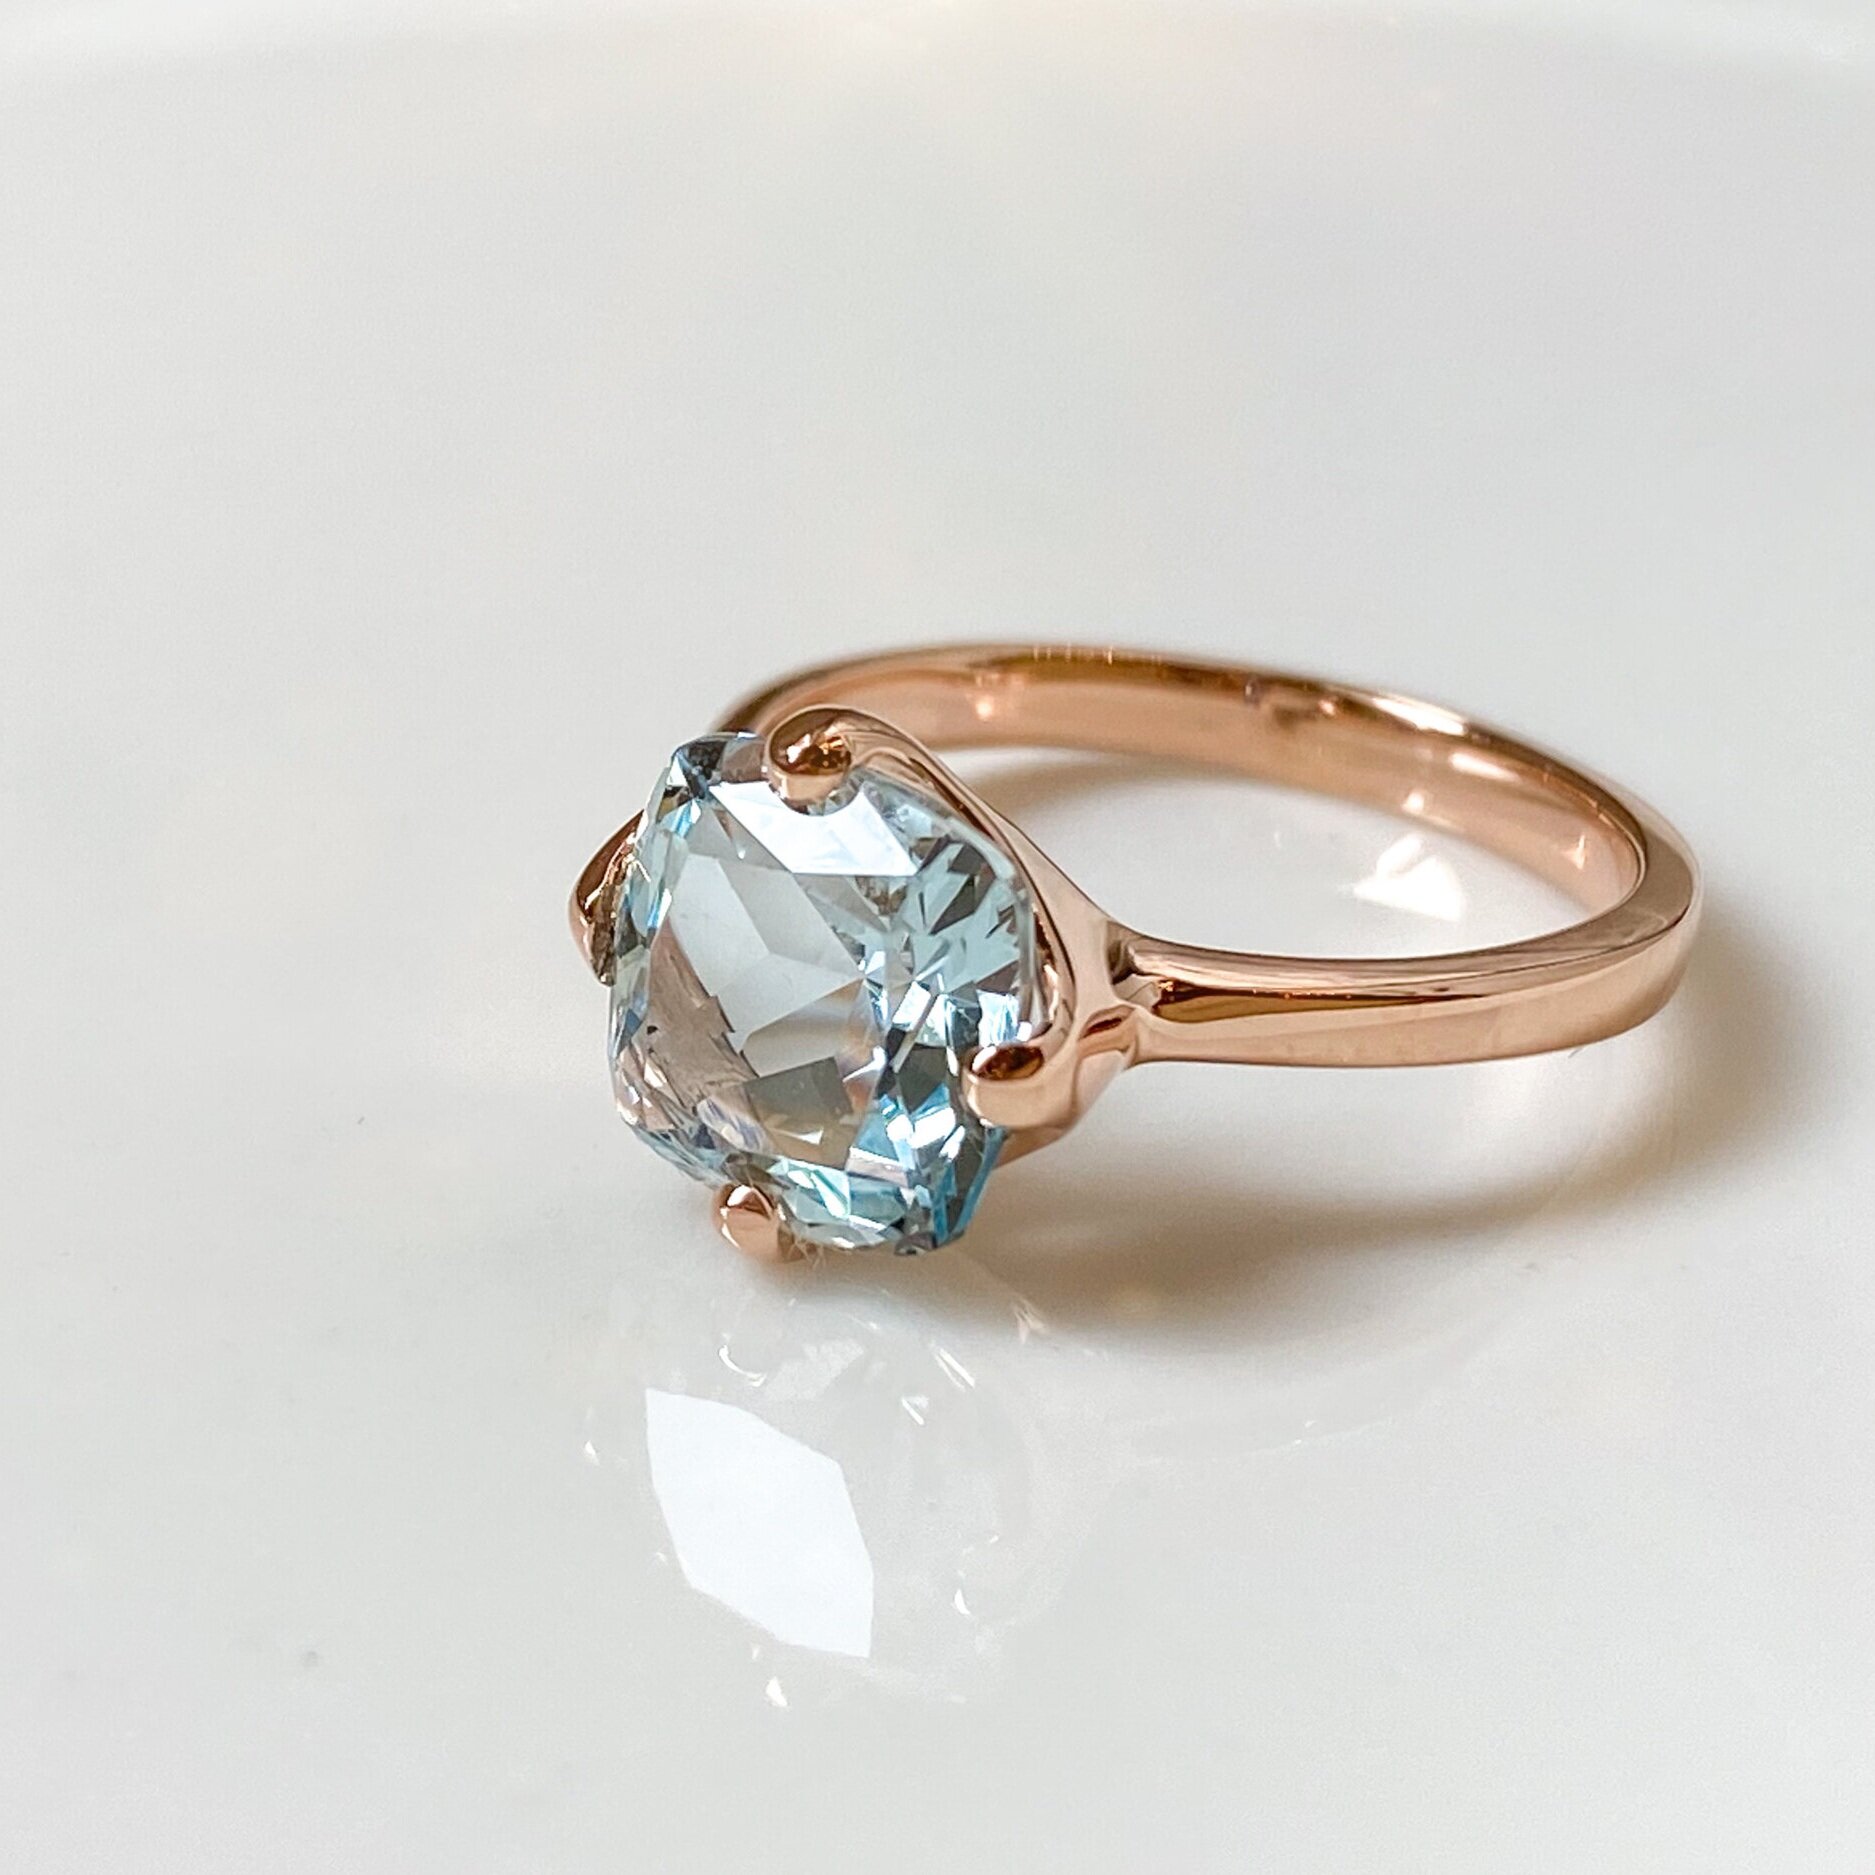 14k rose gold ring with aquamarine